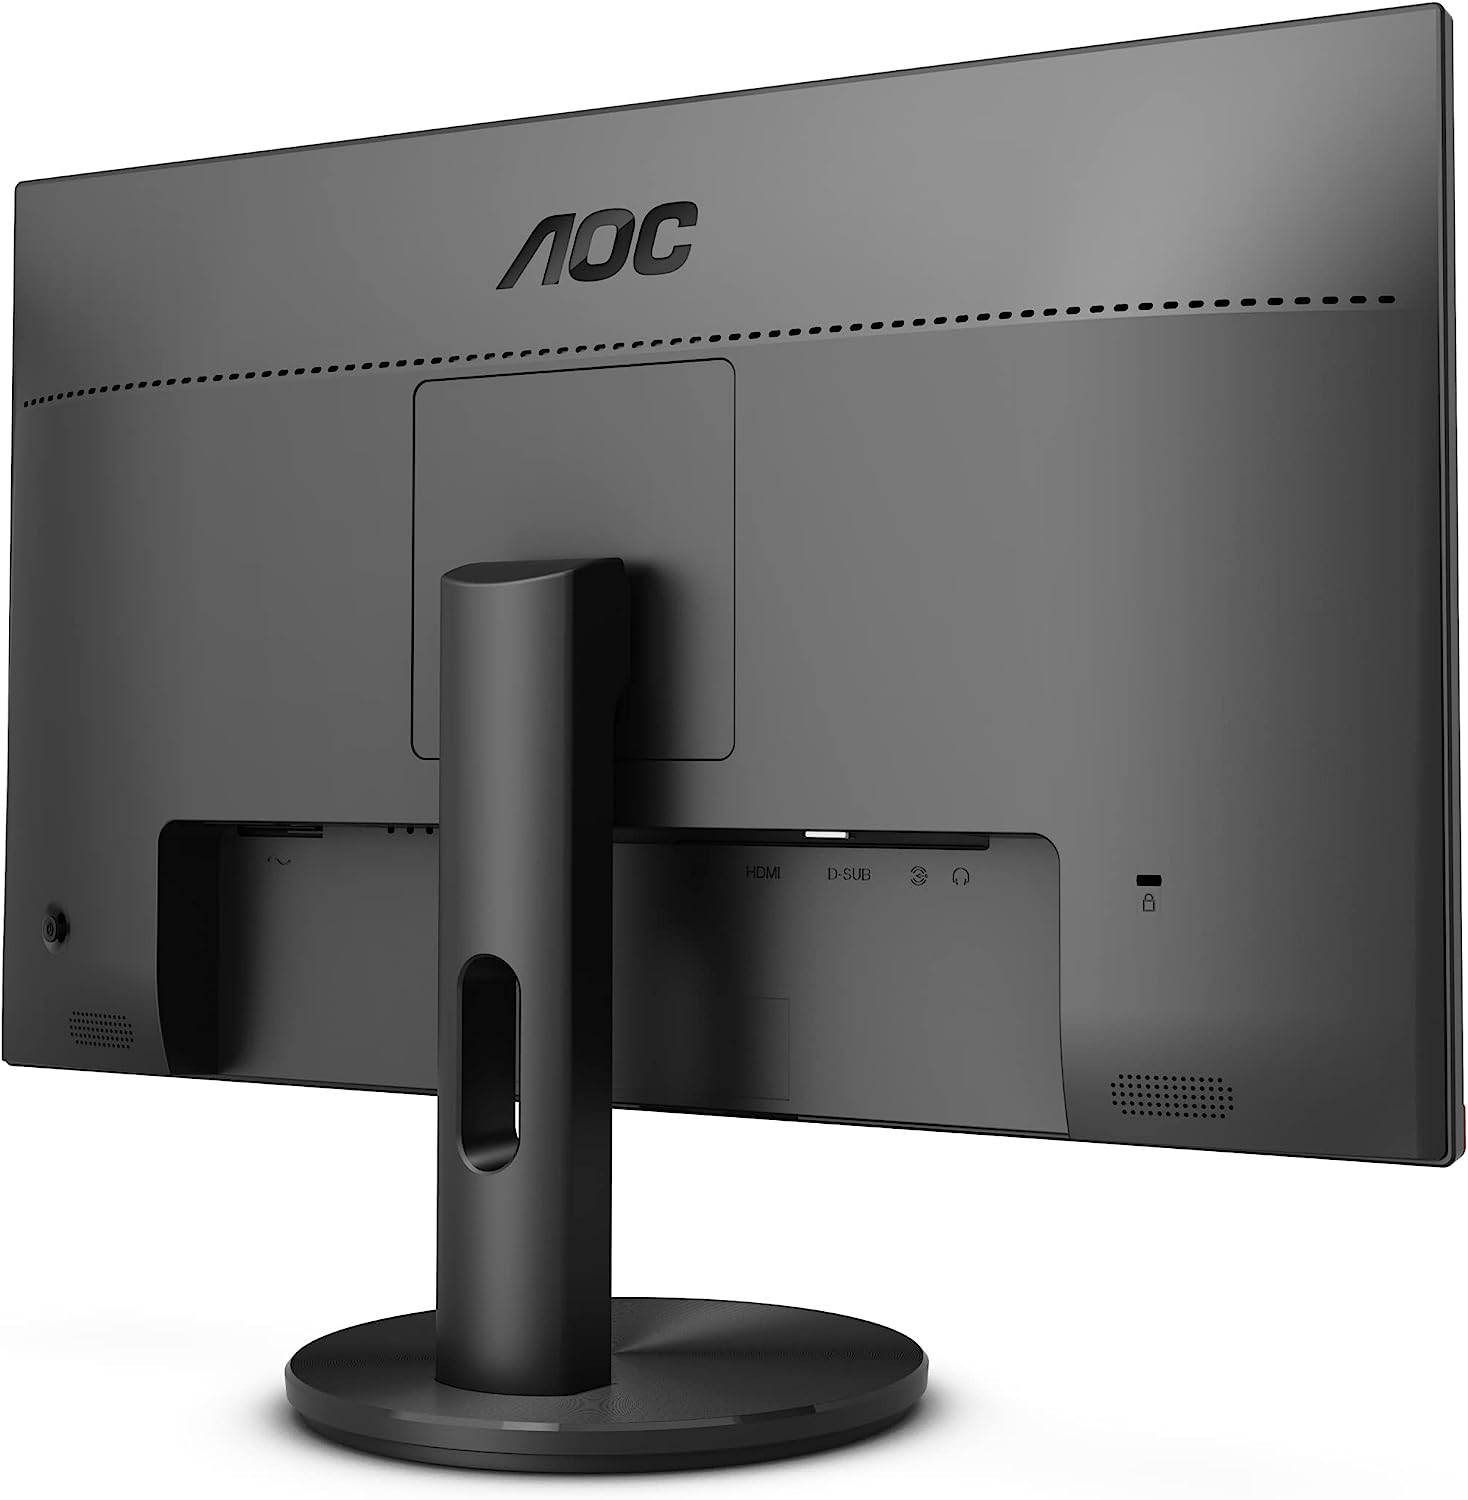 AOC G2490VX 24 Gaming Monitor - Ultra-Narrow Borders, AMD FreeSync Premium - Black Design 0685417725786